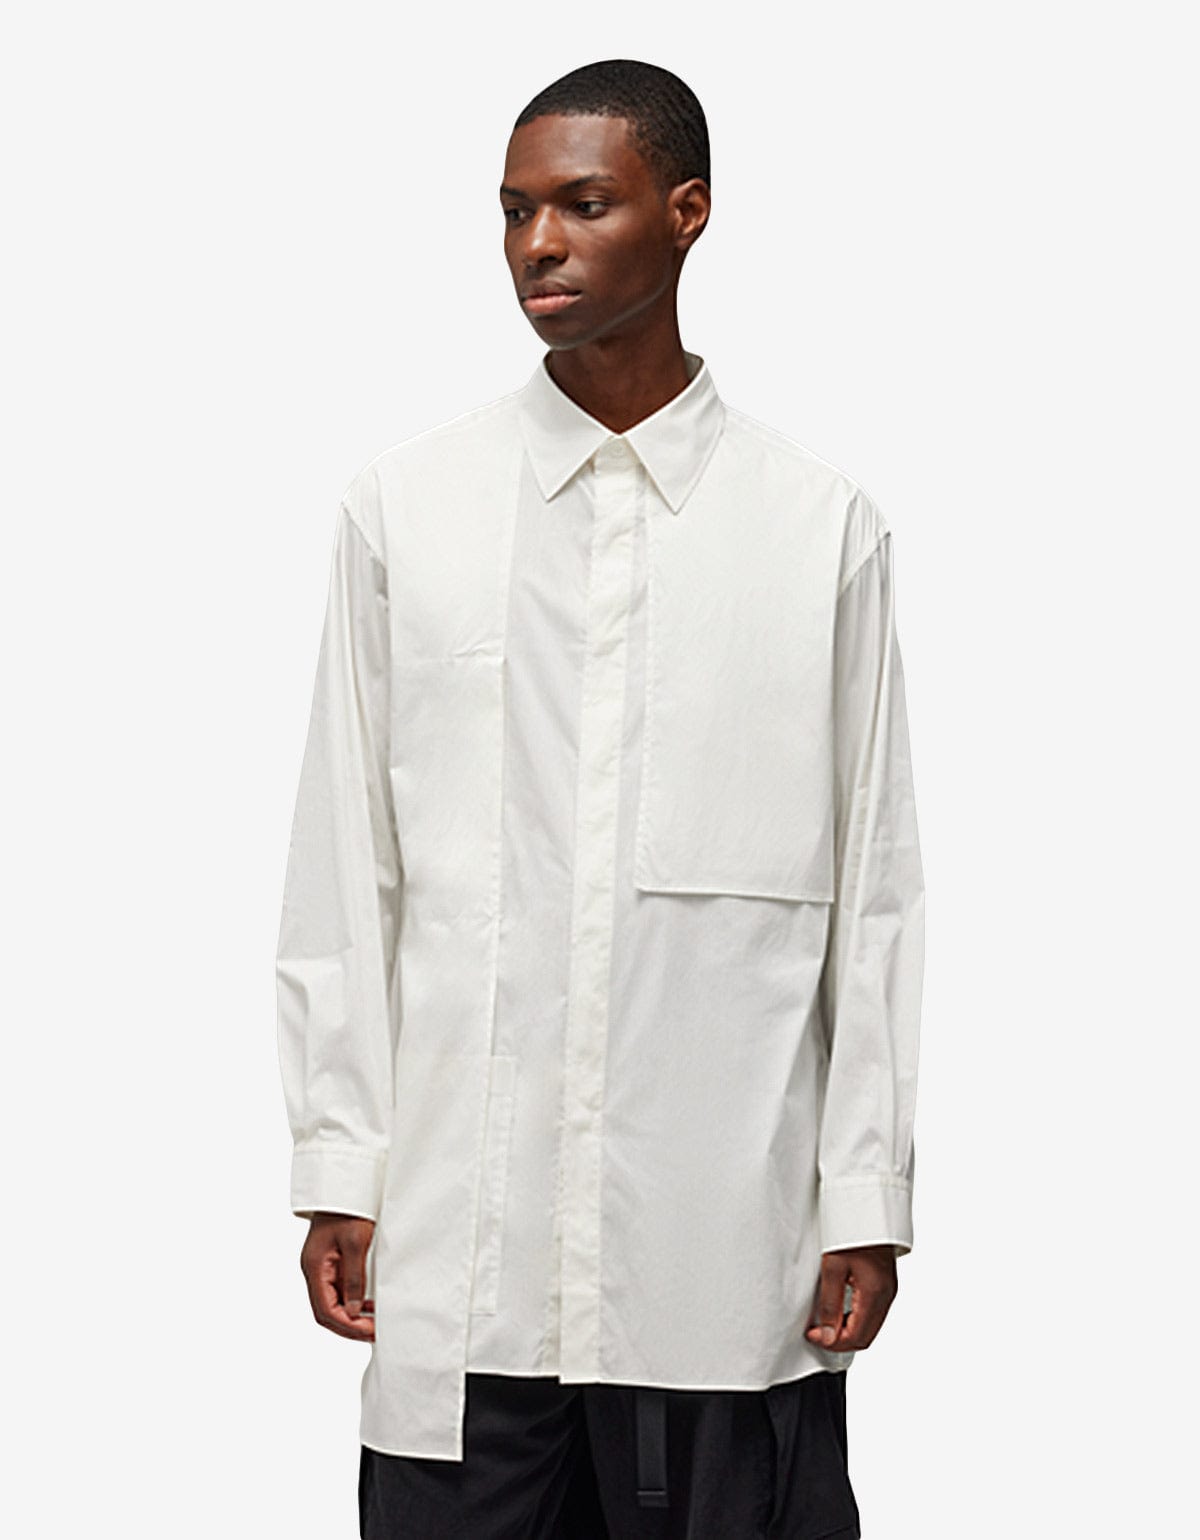 Y-3 Y-3 Off White Cotton Shirt